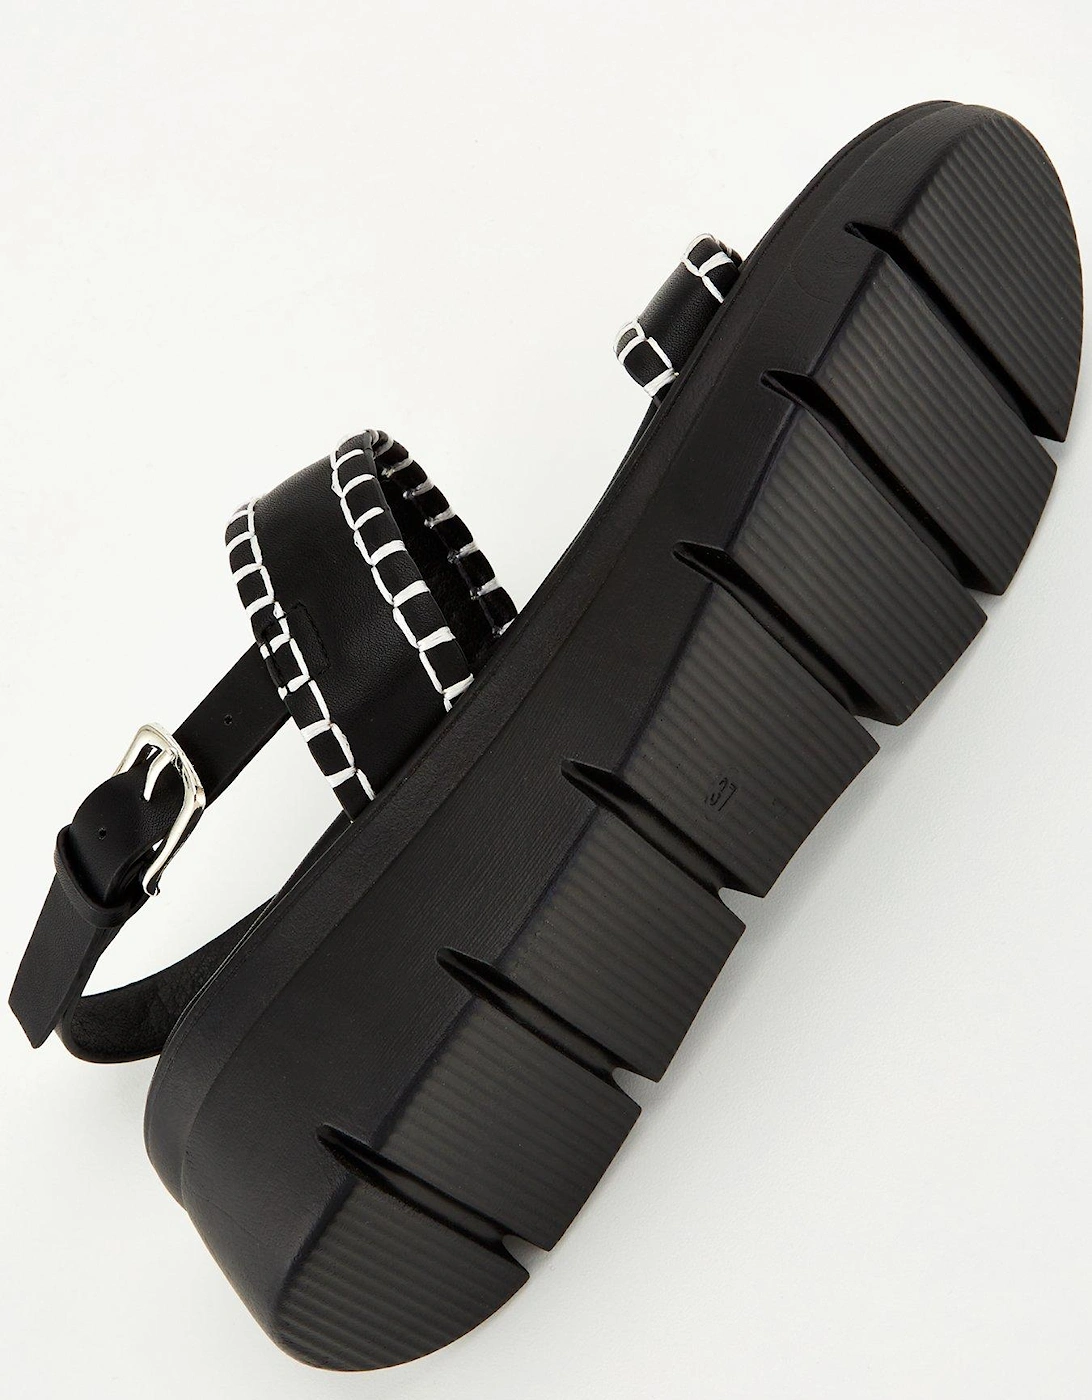 Irie Stitch Detail Wedged Sandal - Black